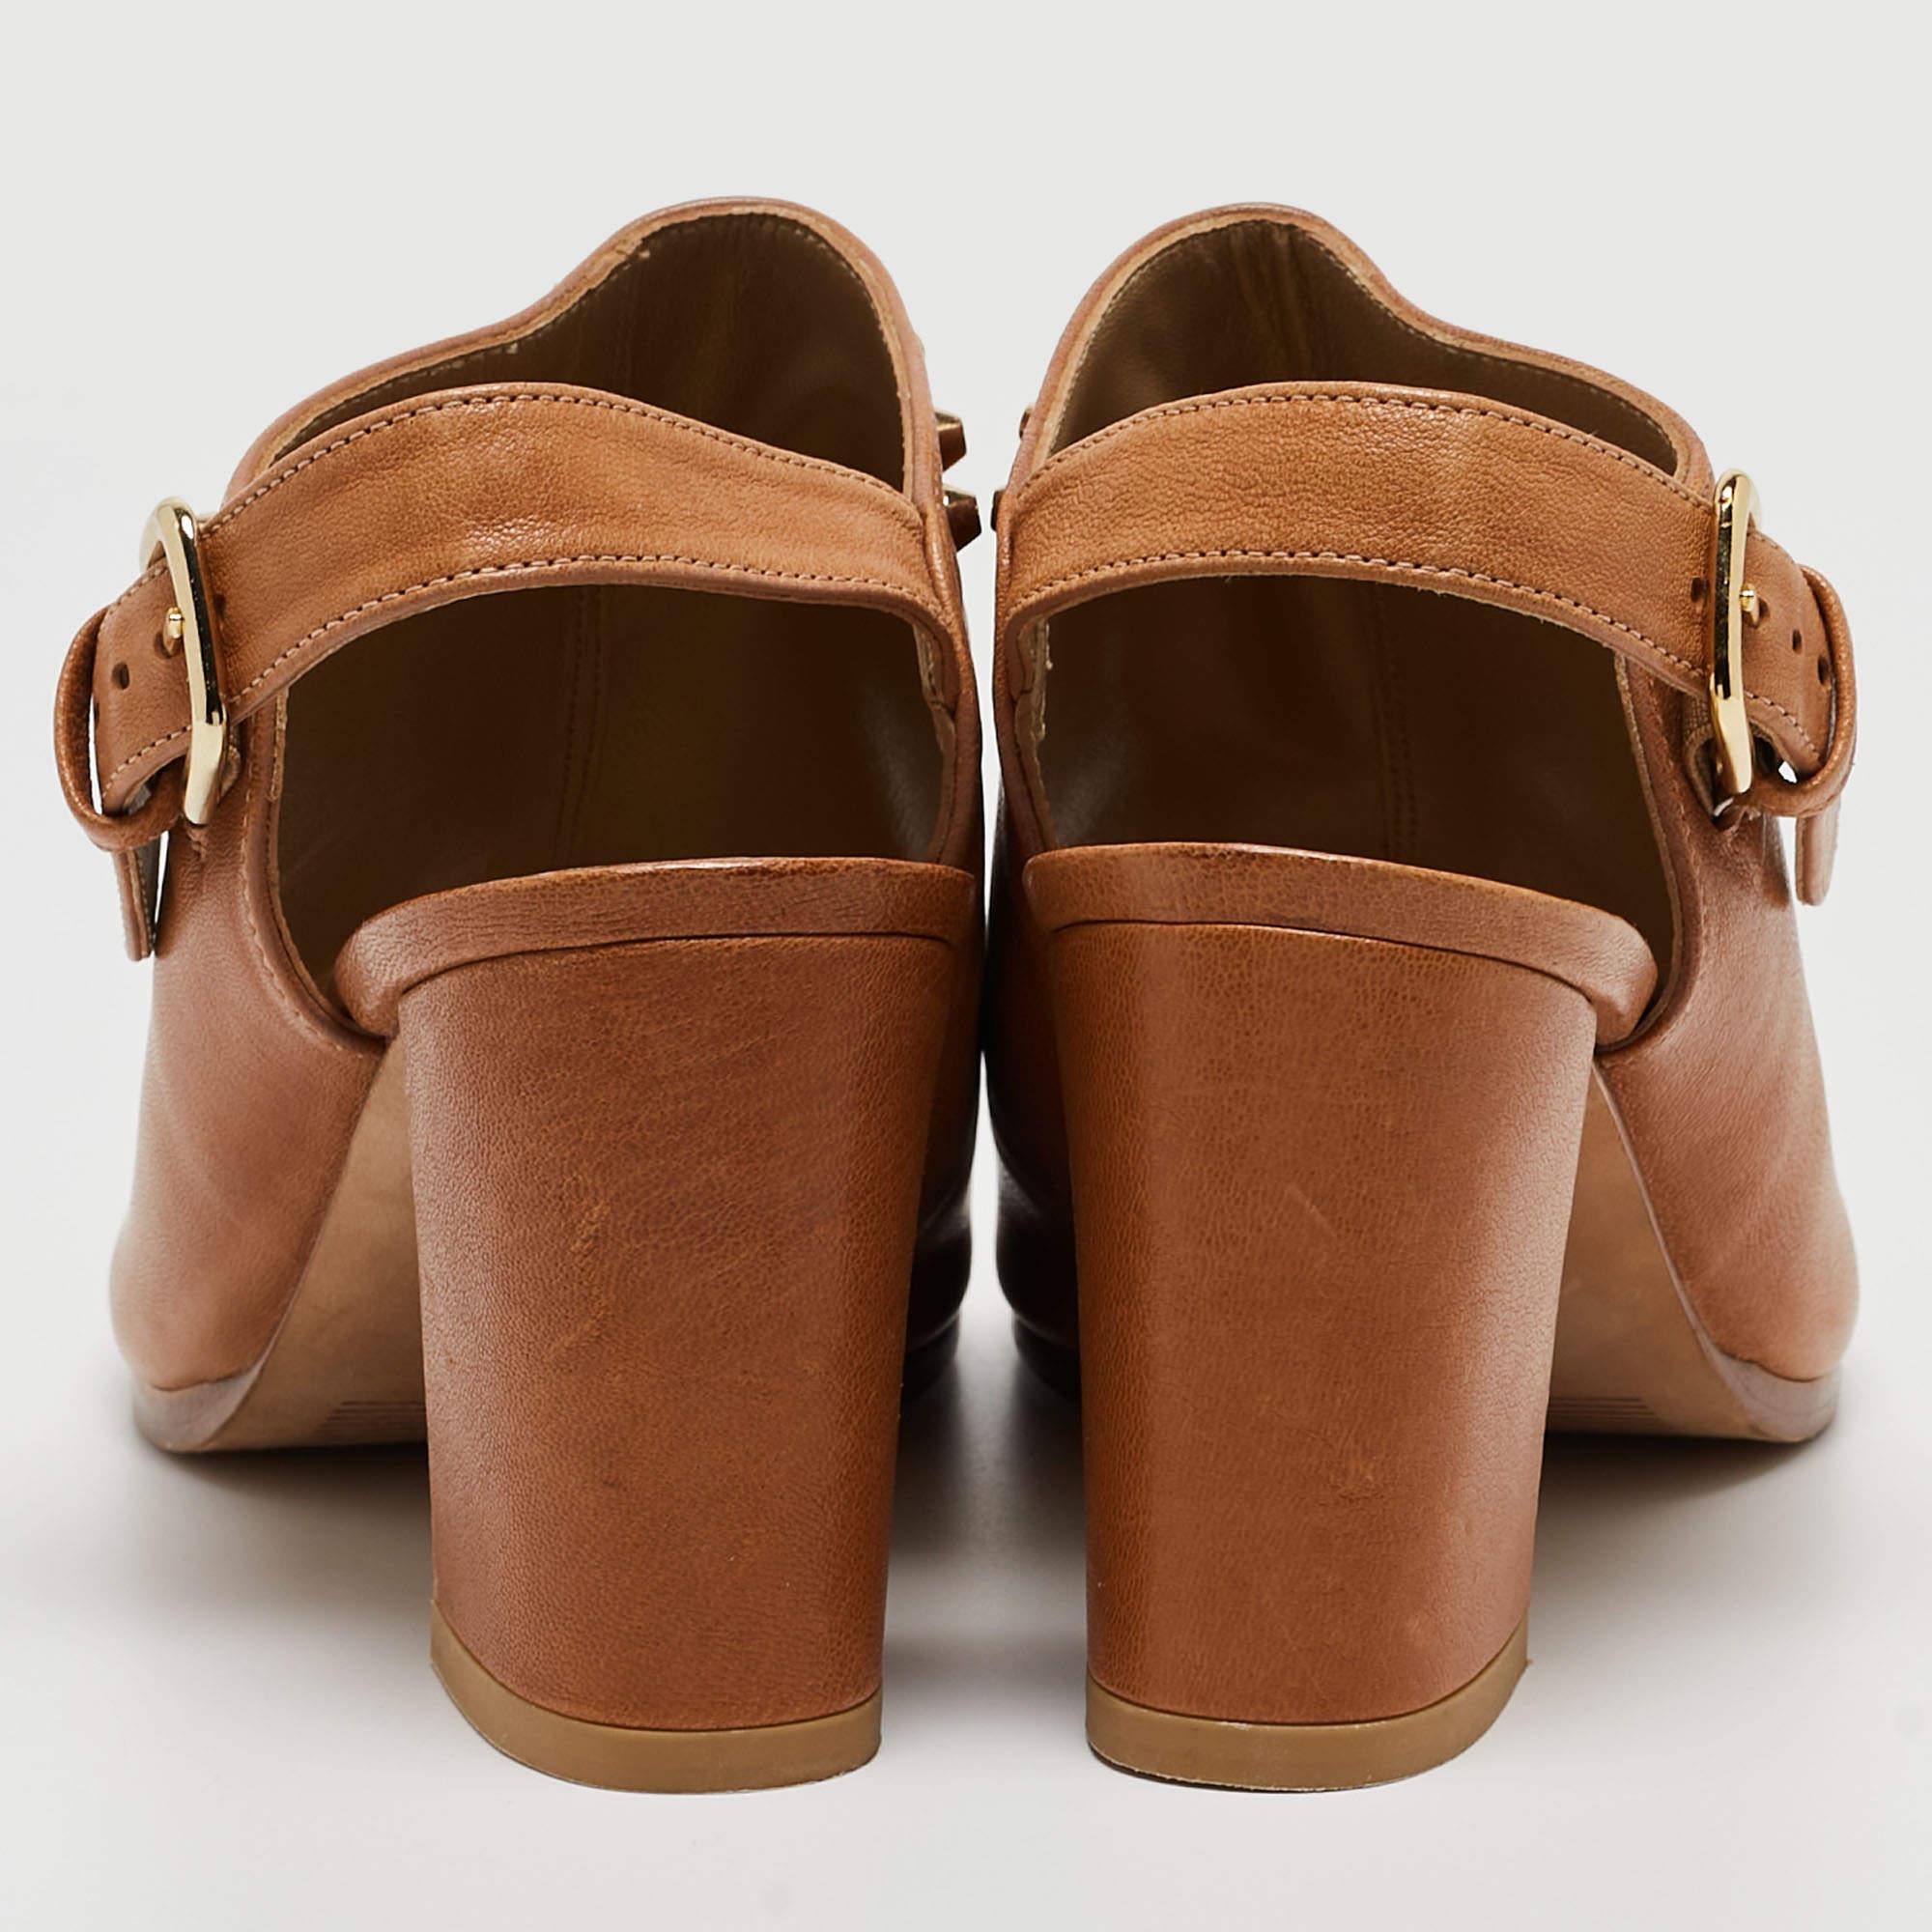 Stuart Weitzman Tan Leather Studded Slingback Sandals Size 36 1